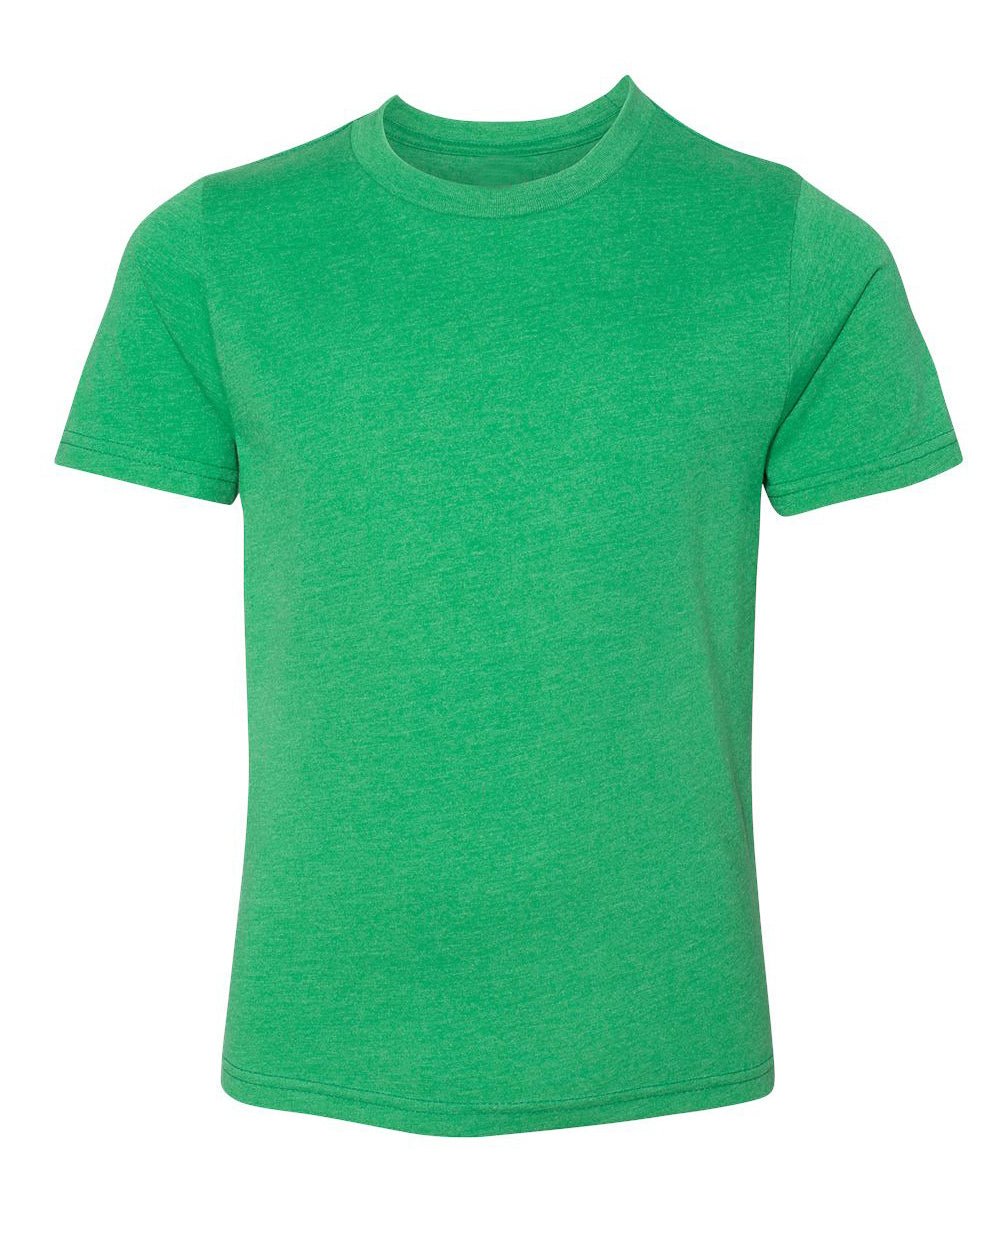 Kids T Shirts - Wholesale 10PK - Mato & Hash